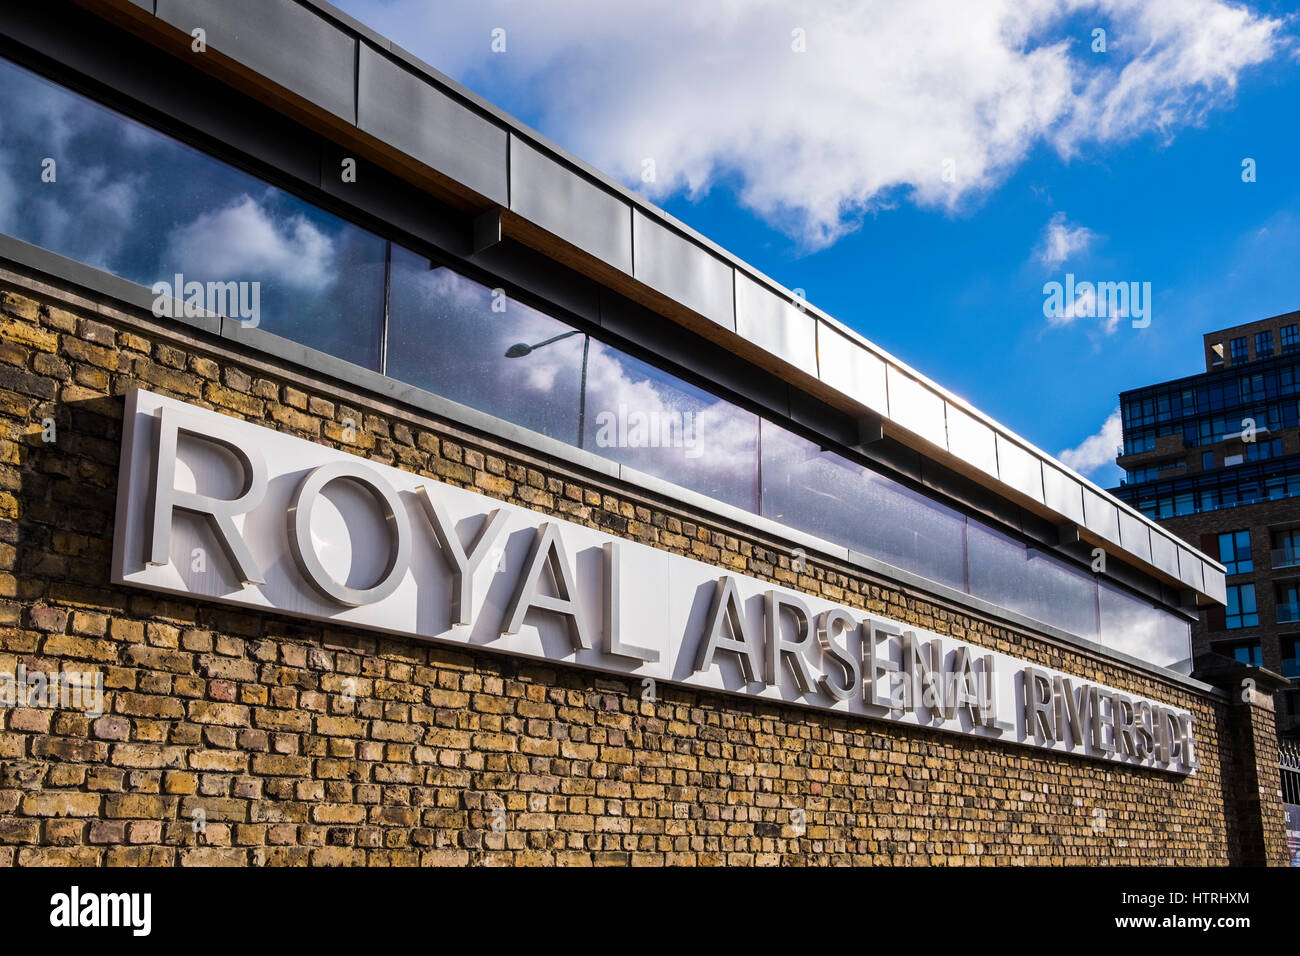 Royal Arsenal Riverside development on the former Royal Arsenal, Woolwich, London, England, U.K. Stock Photo